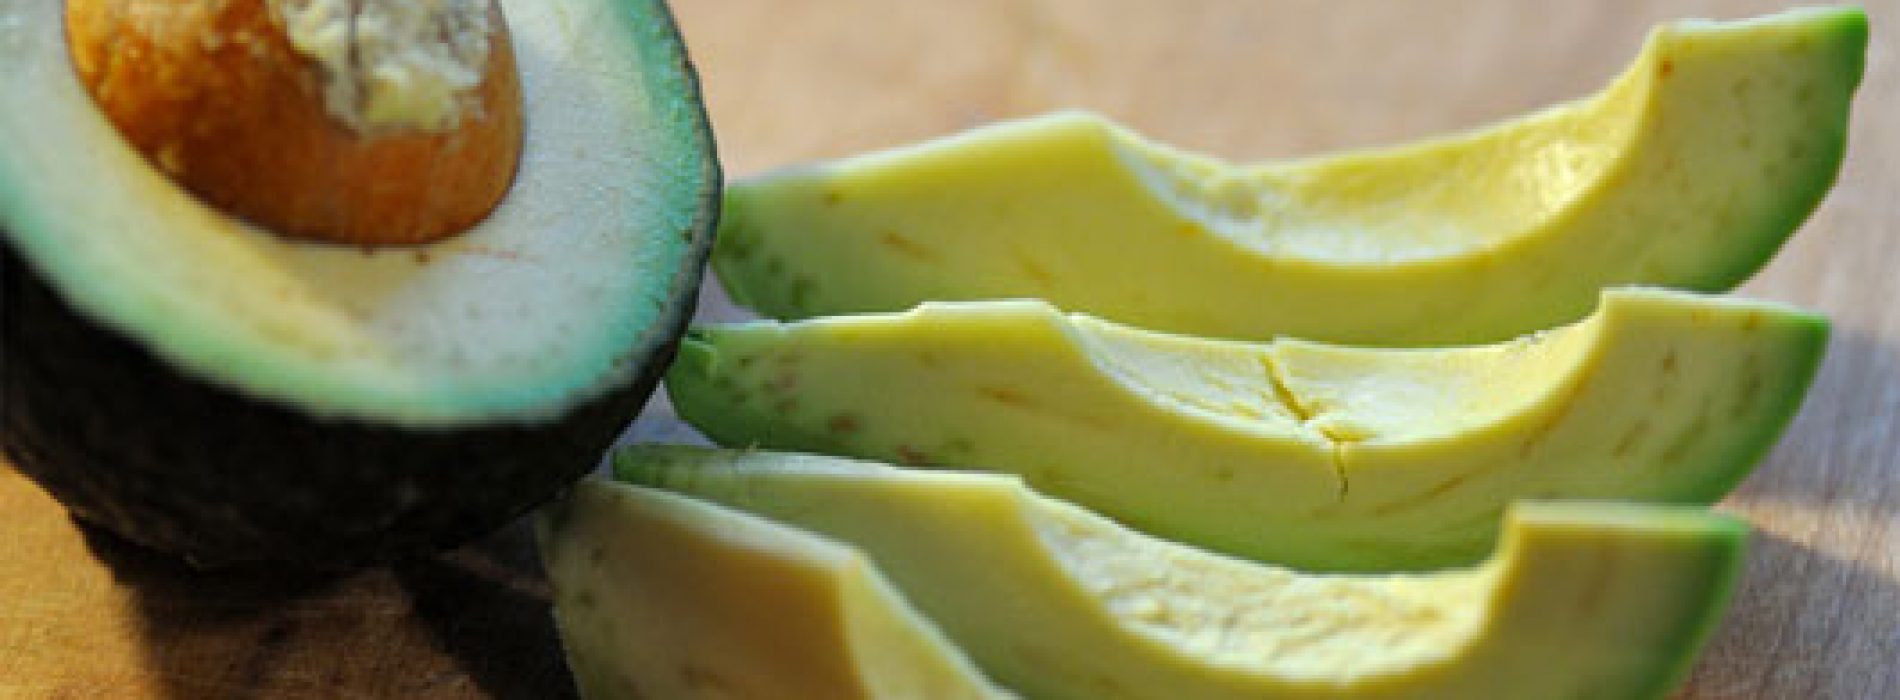 Chileense avocado bestrijdt resistente bacterien